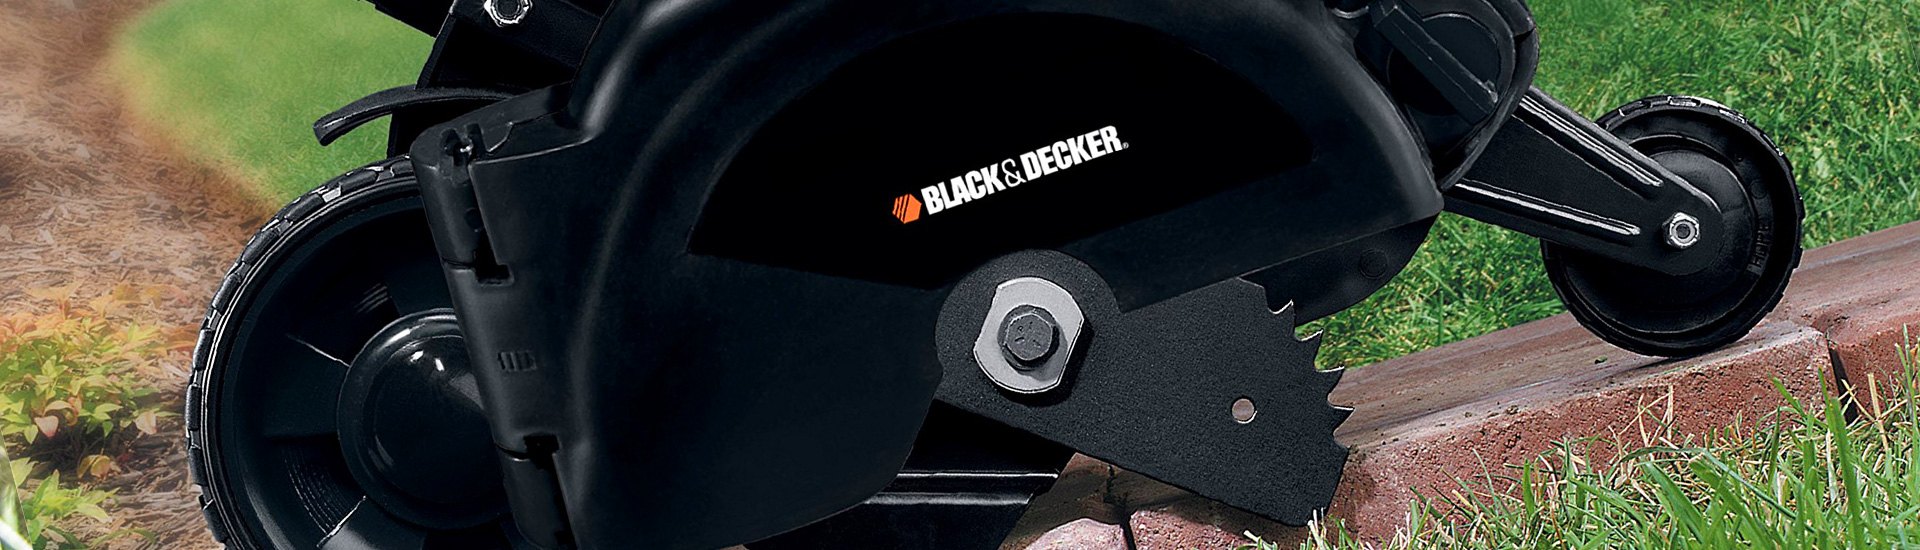 BLACK+DECKER Edger Belts & Blades at